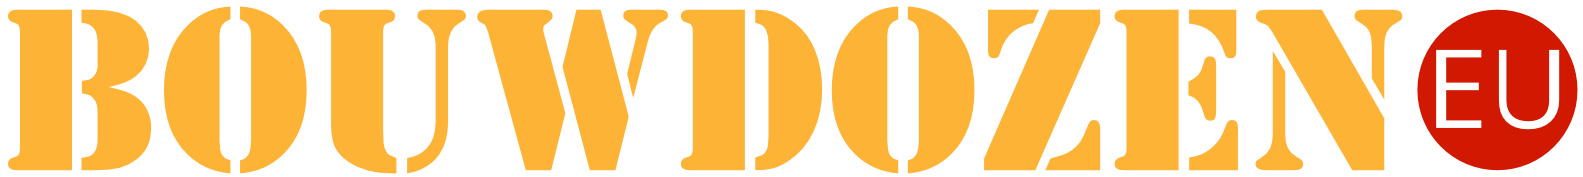 cropped logo bouwdozen eurood